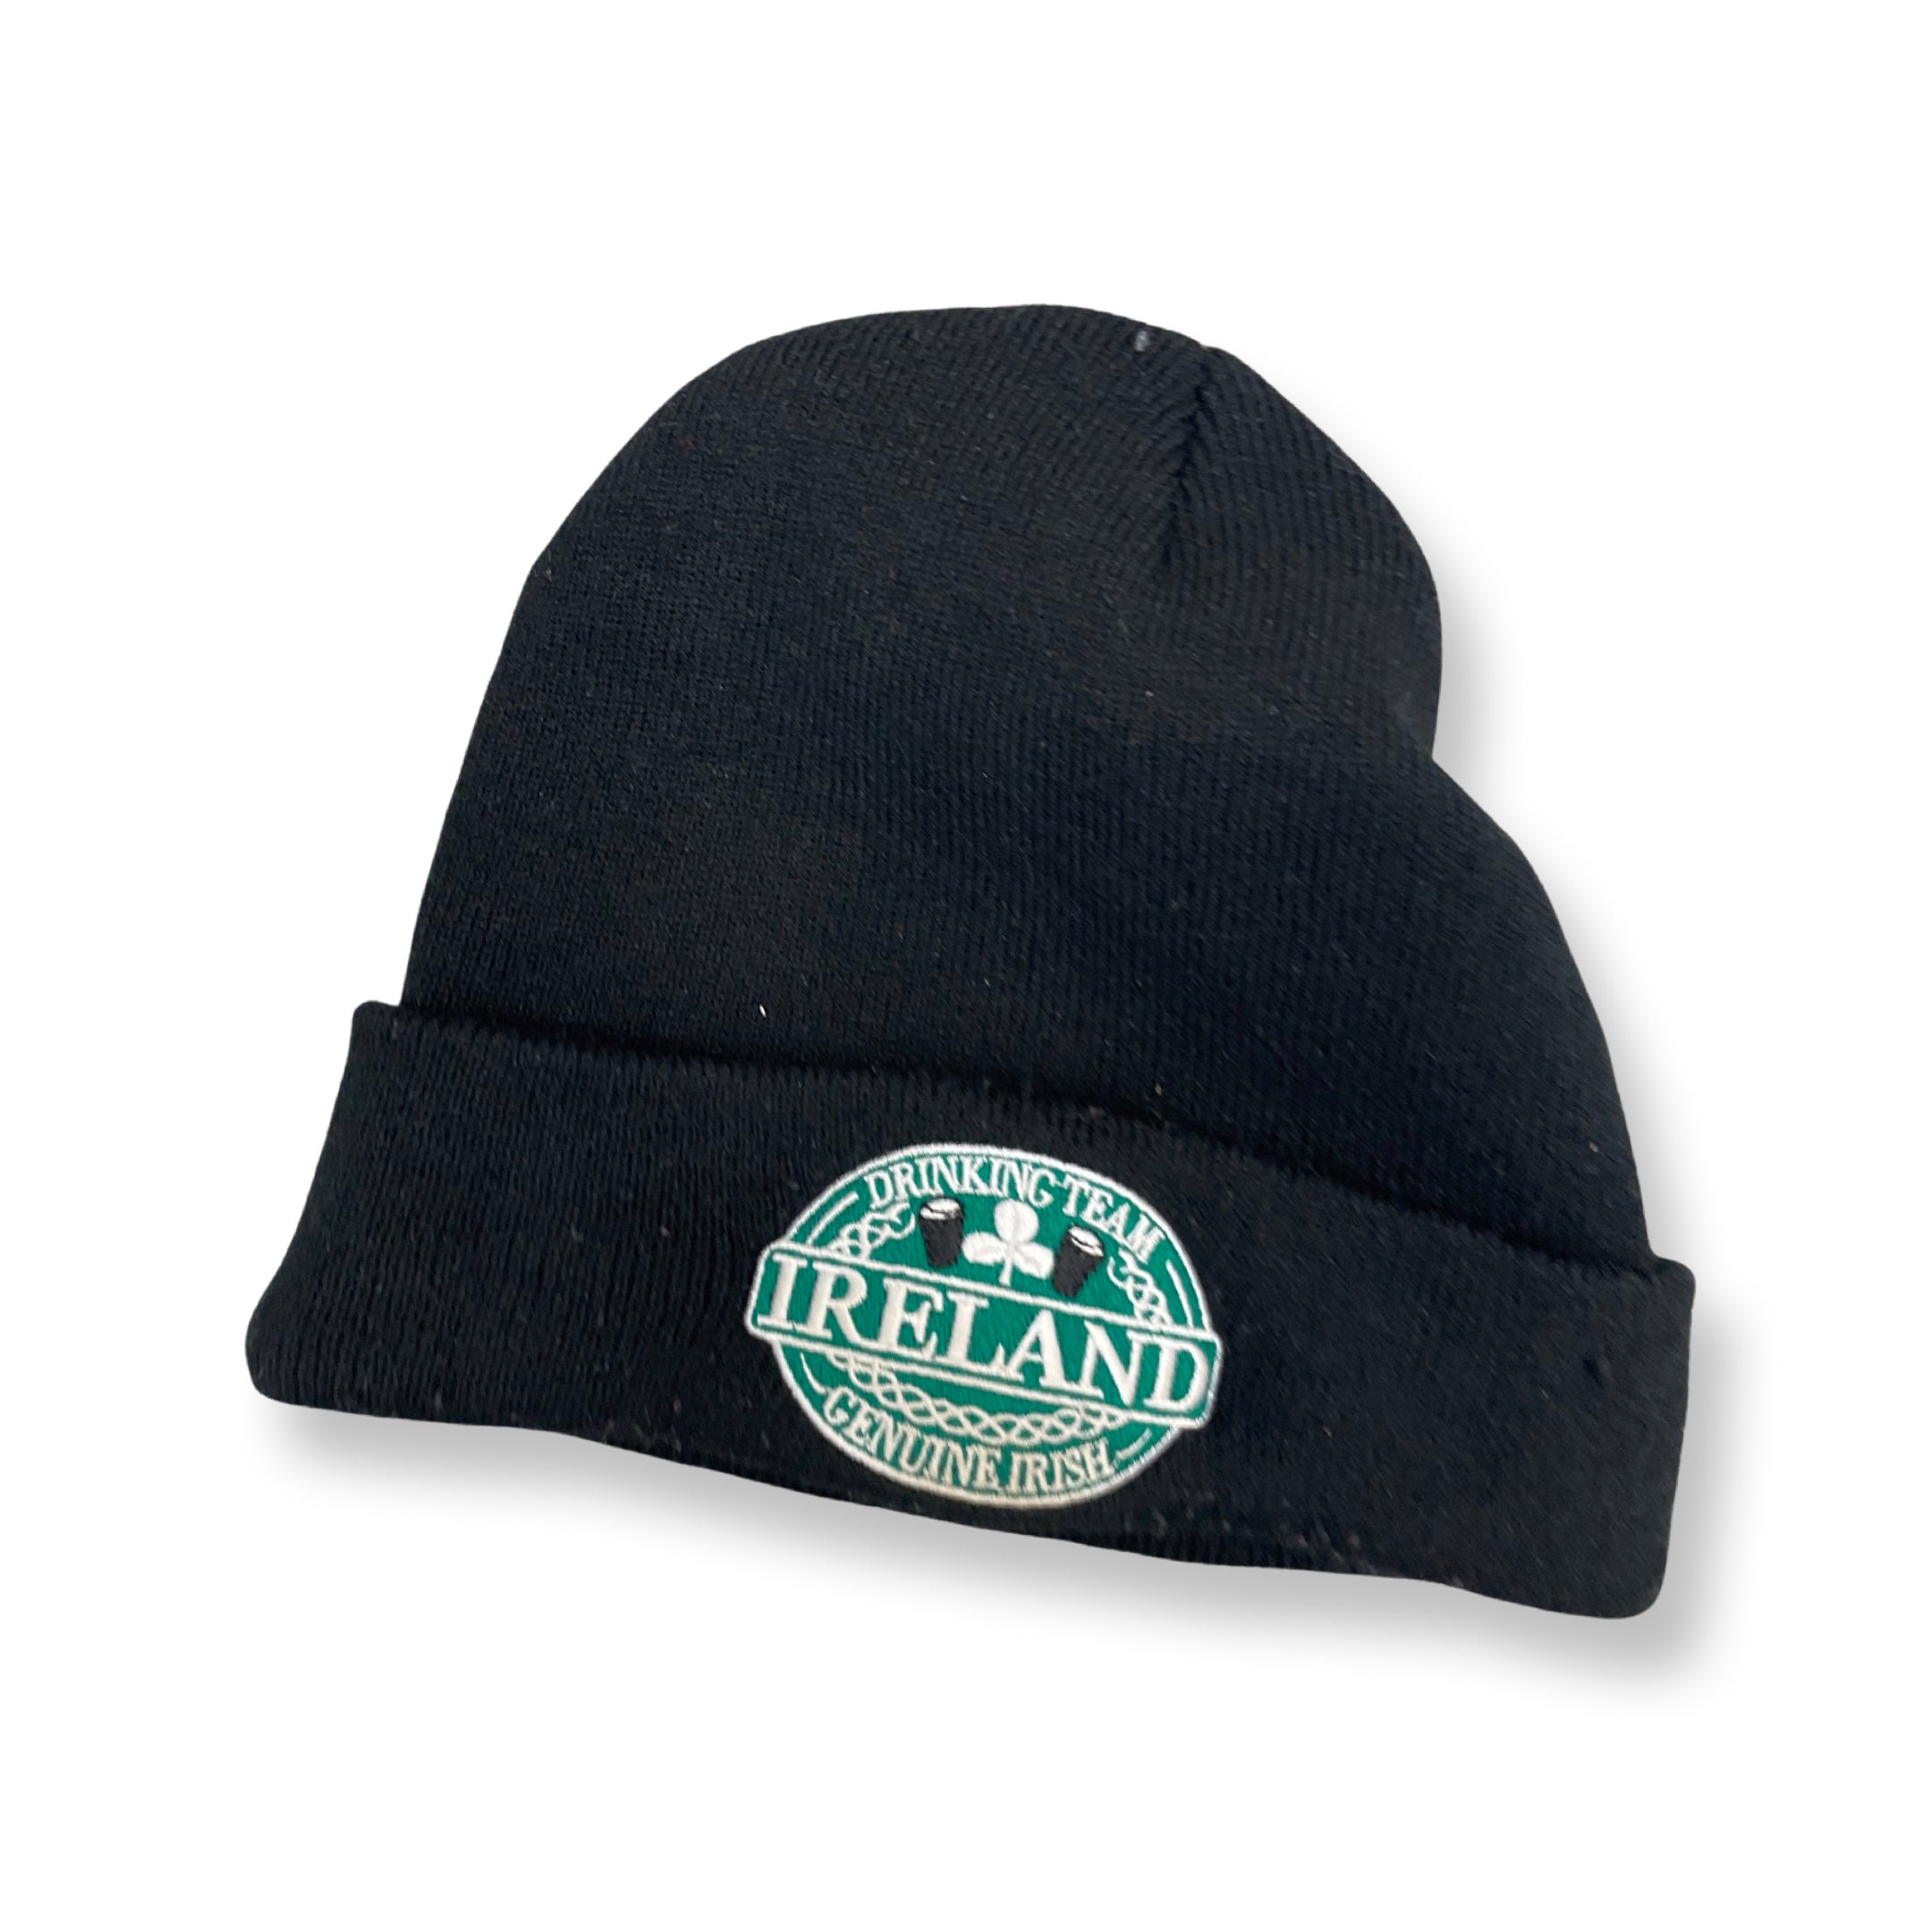 Rubynee Vintage y2k Knitted Black Beanie Turn Up Hat With Ireland Drinking Team Crest Design